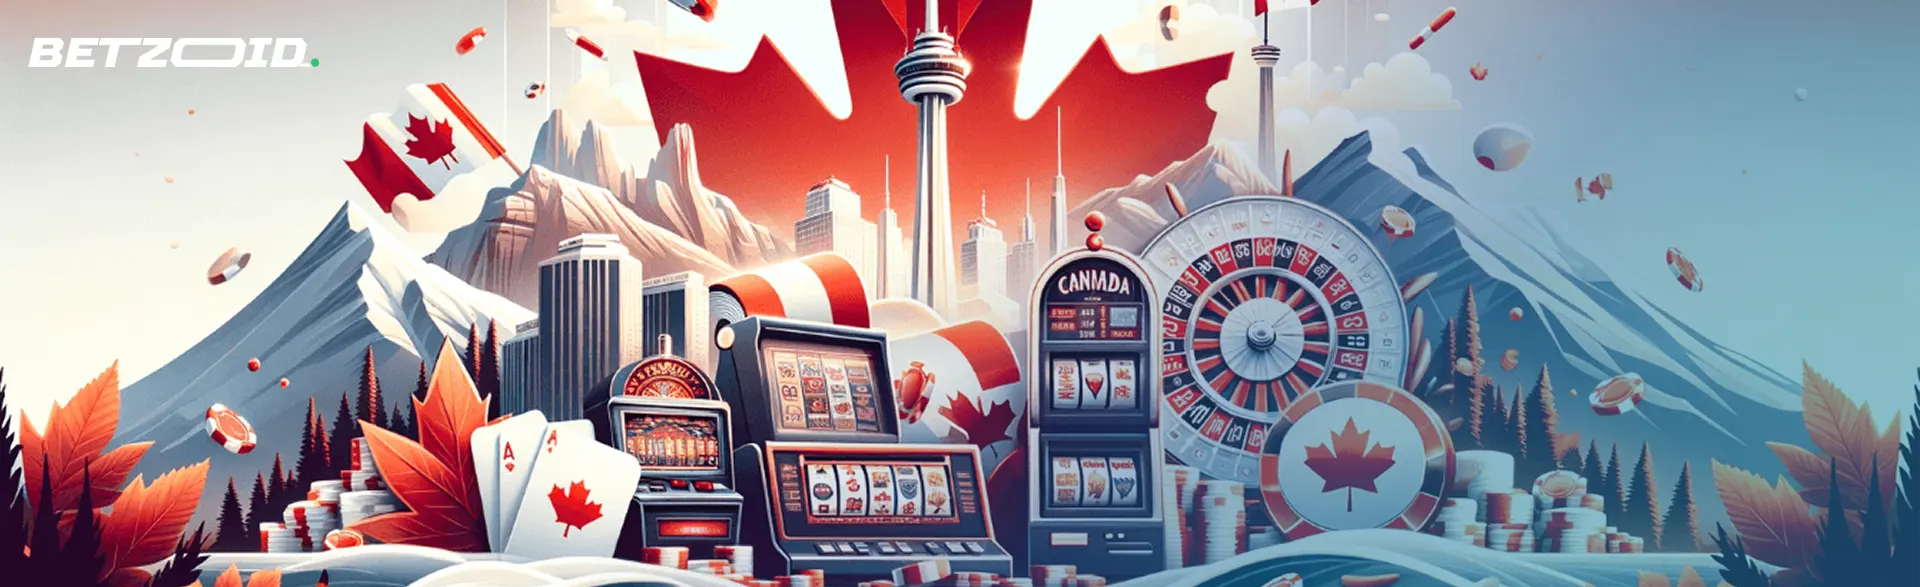 Canadian landmarks with symbols of legitimate online casinos.